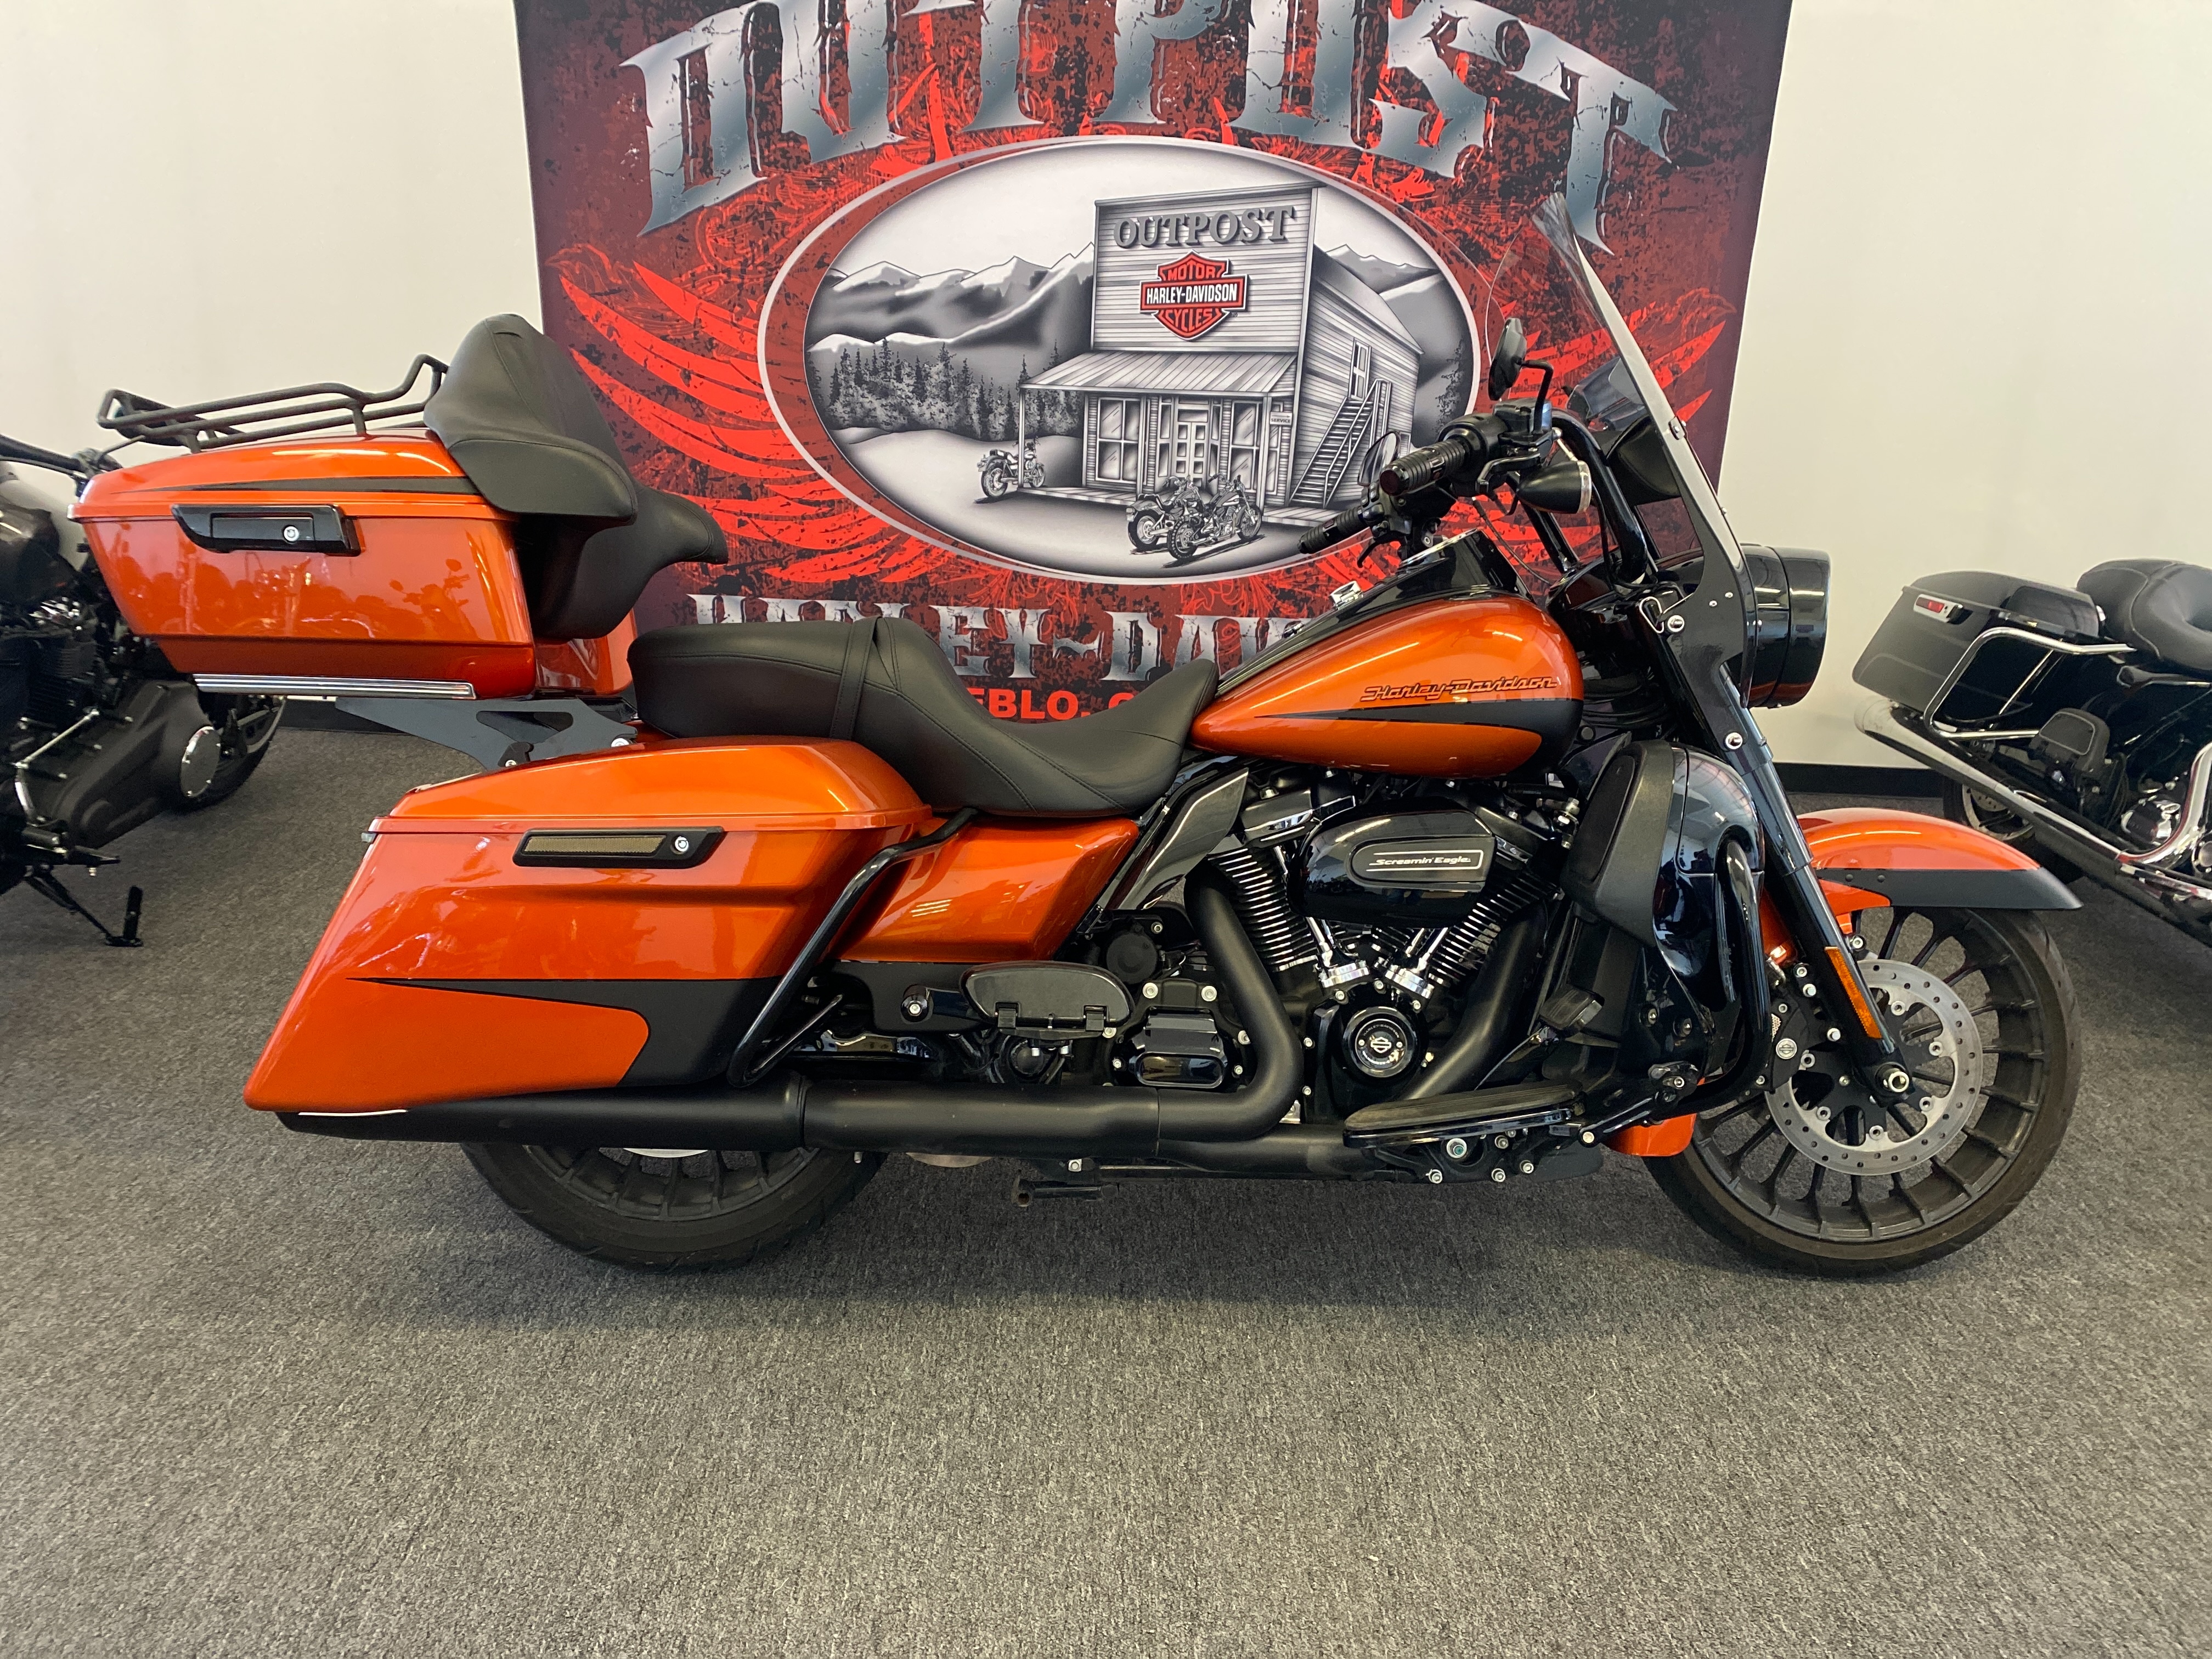 2019 Harley-Davidson Road King Special at Outpost Harley-Davidson